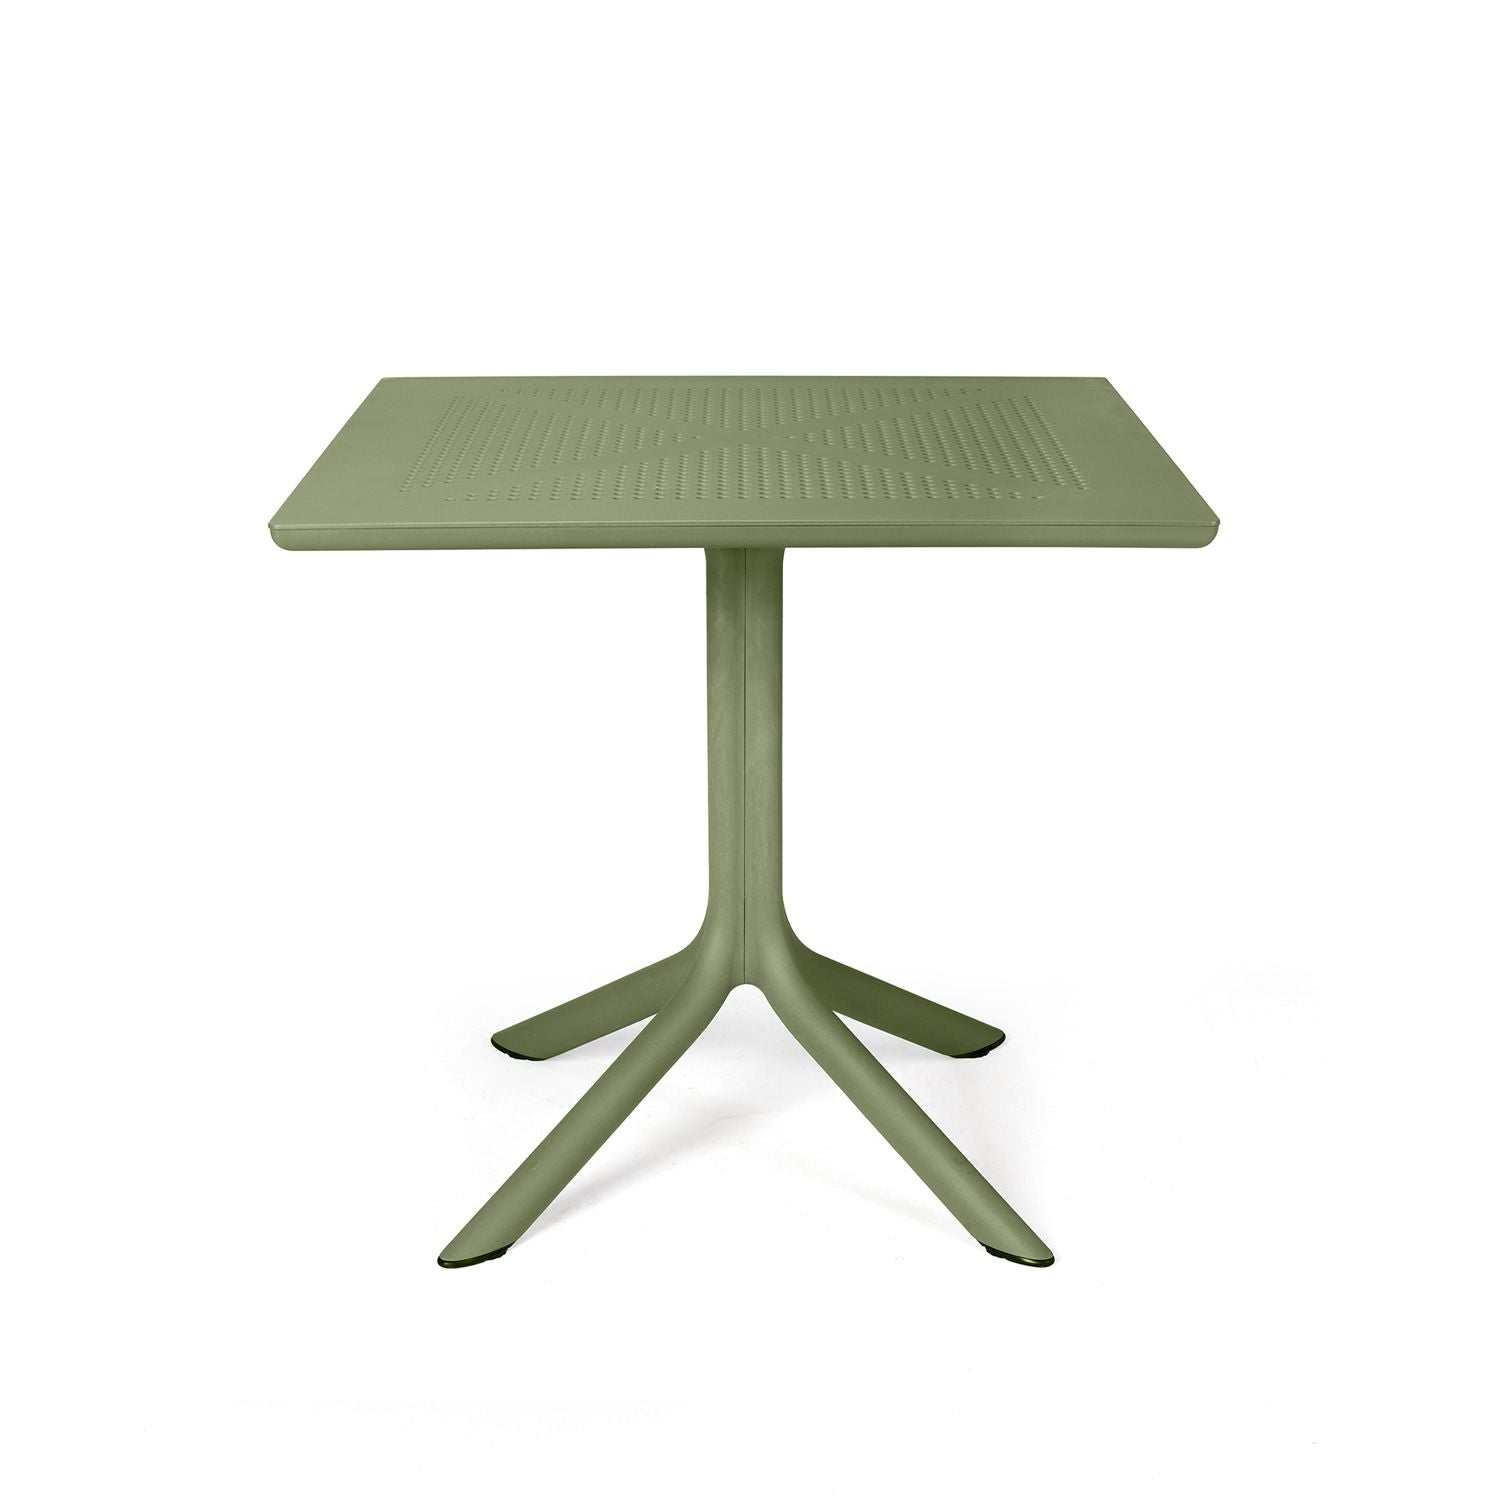 Clip 80cm Garden Table By Nardi - Olive